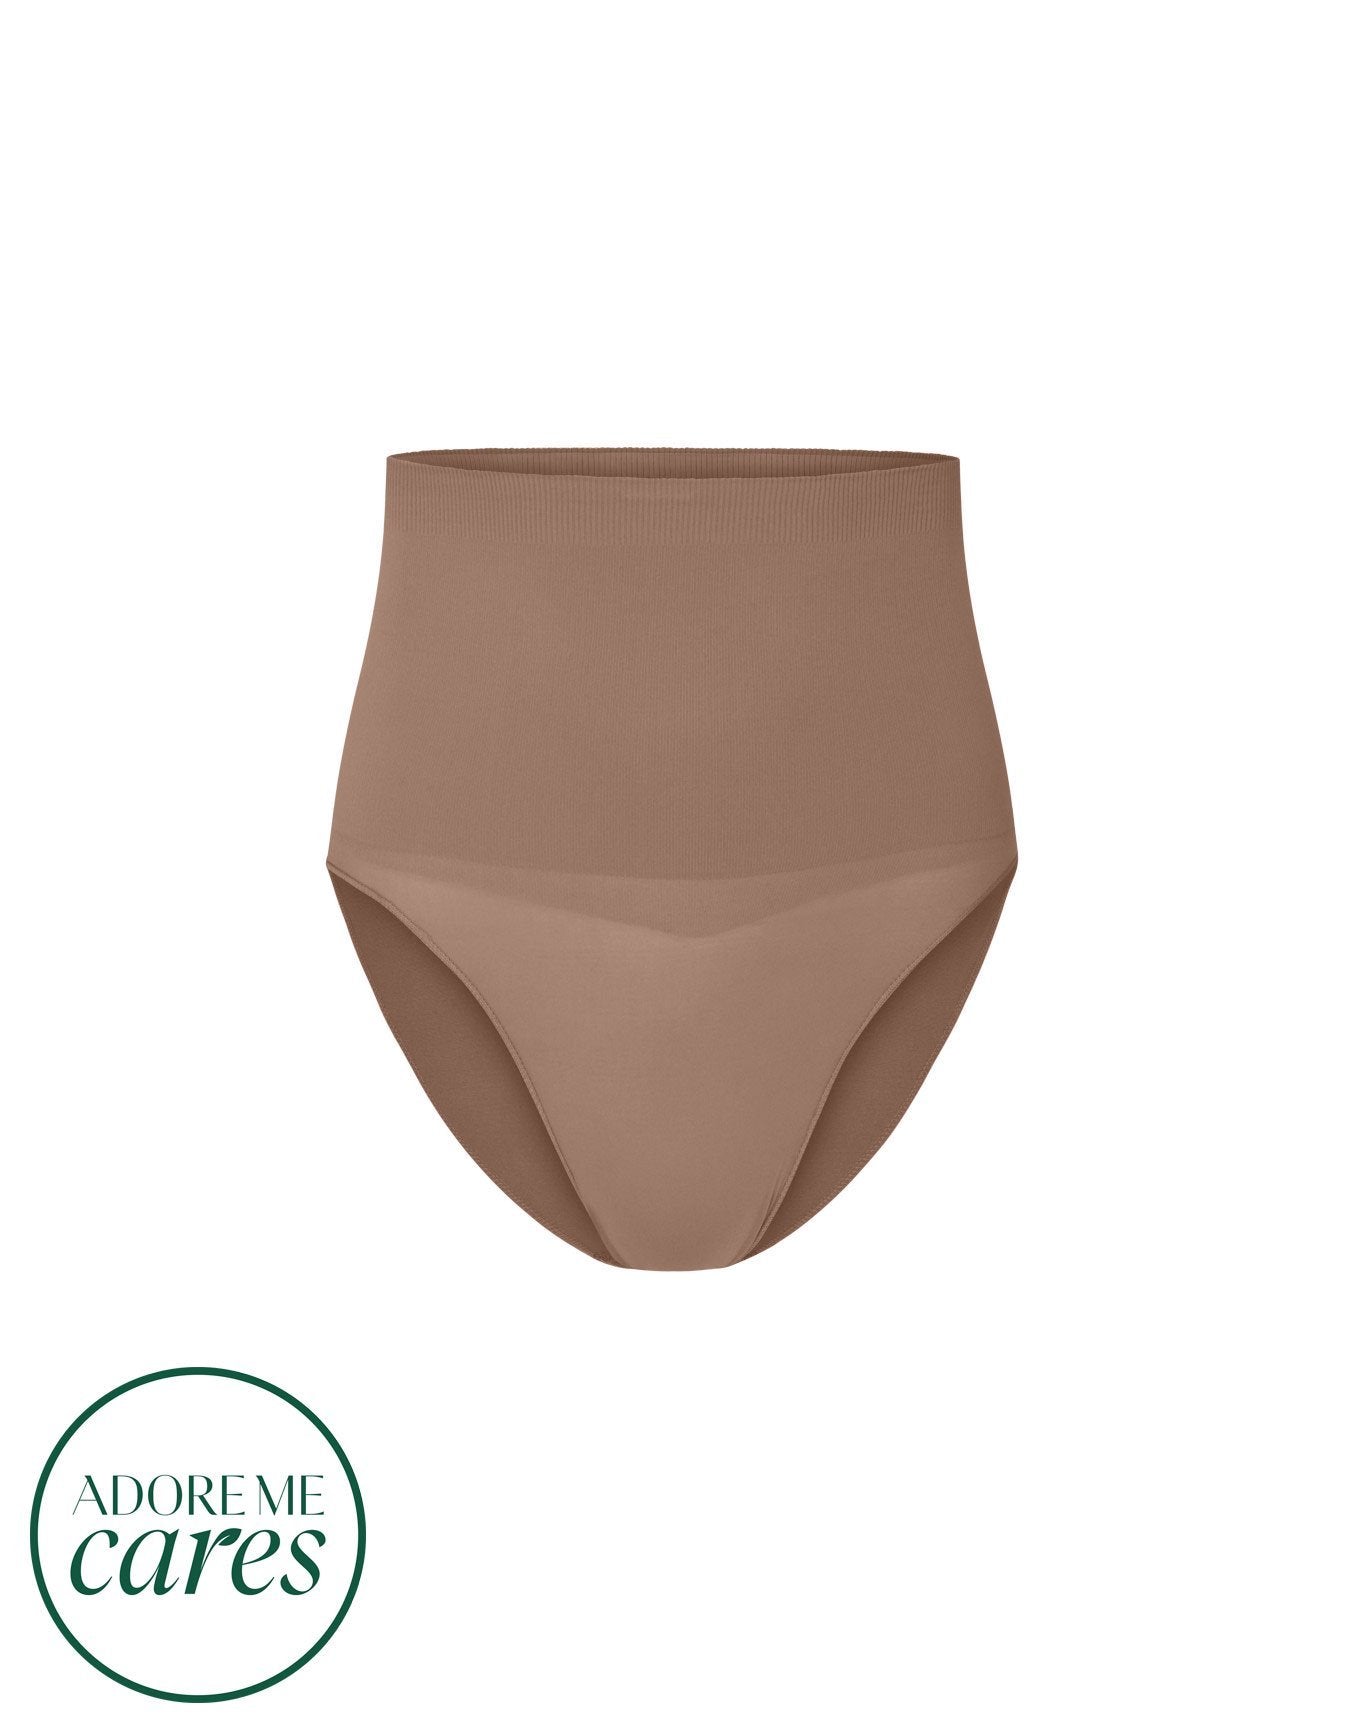 nueskin Hayley High-Compression High-Waist Bikini Brief in color Beaver Fur and shape high waisted